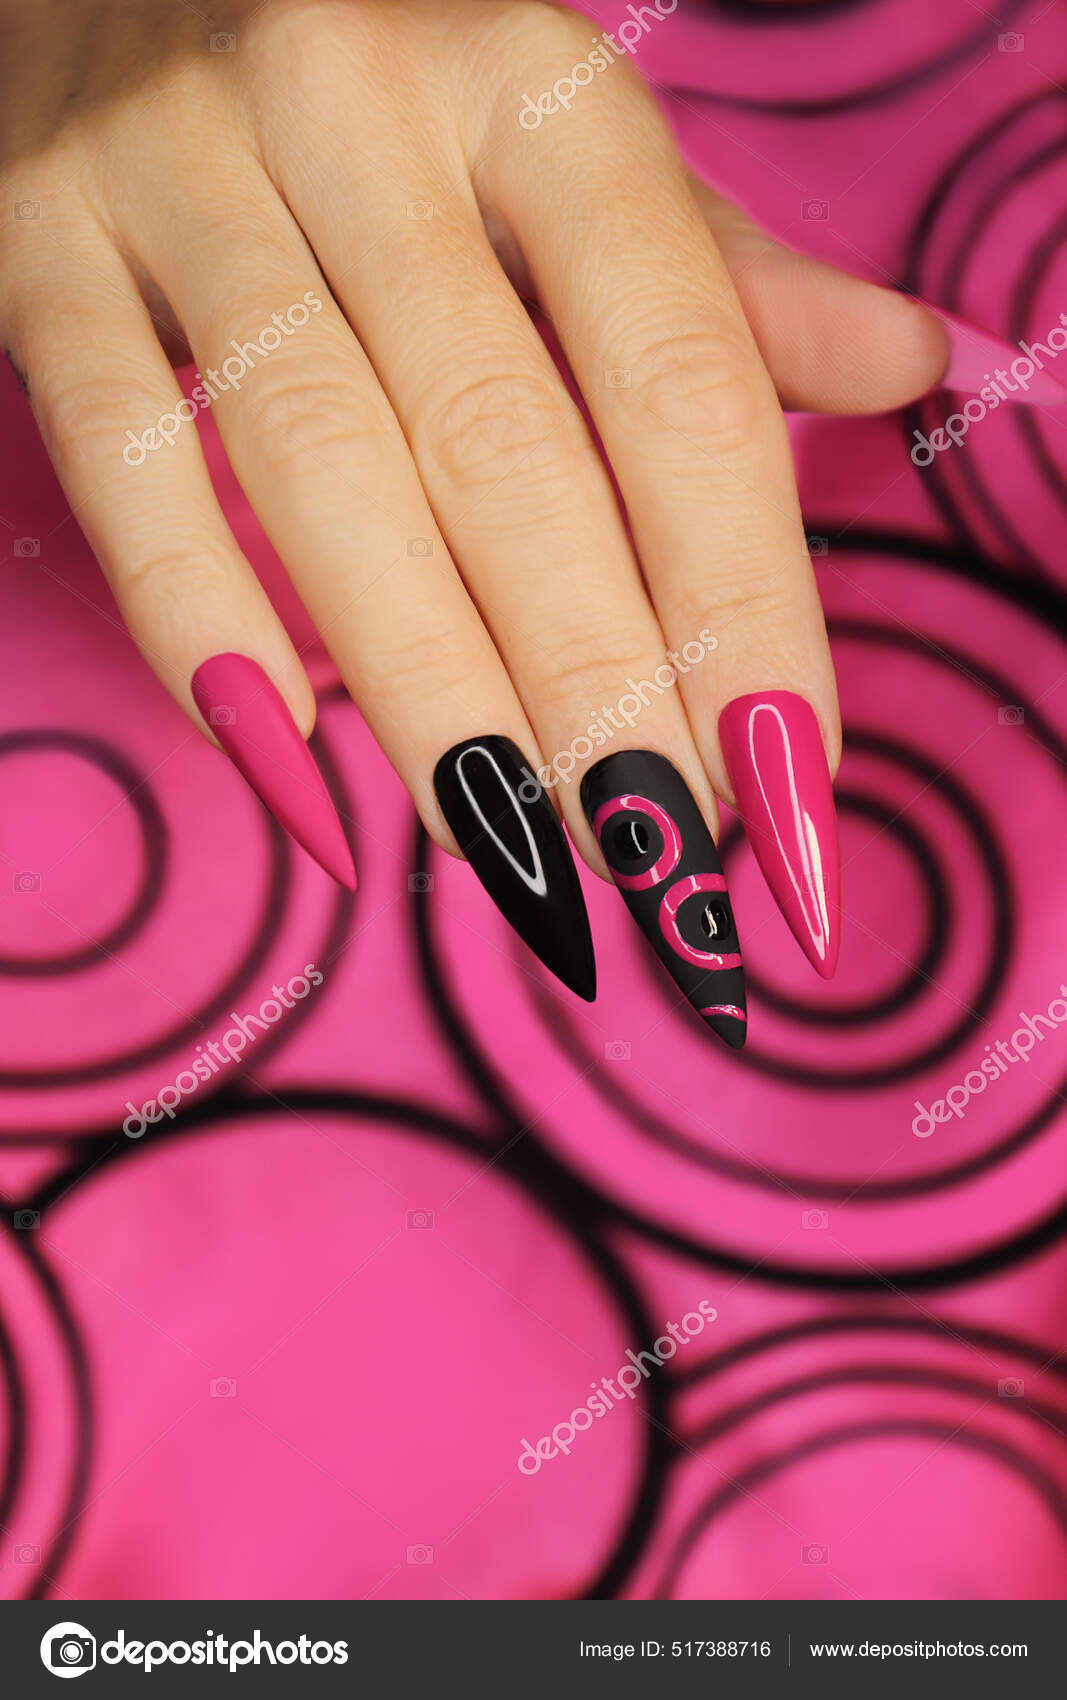 depositphotos 517388716 stock photo fashionable pink black manicure long